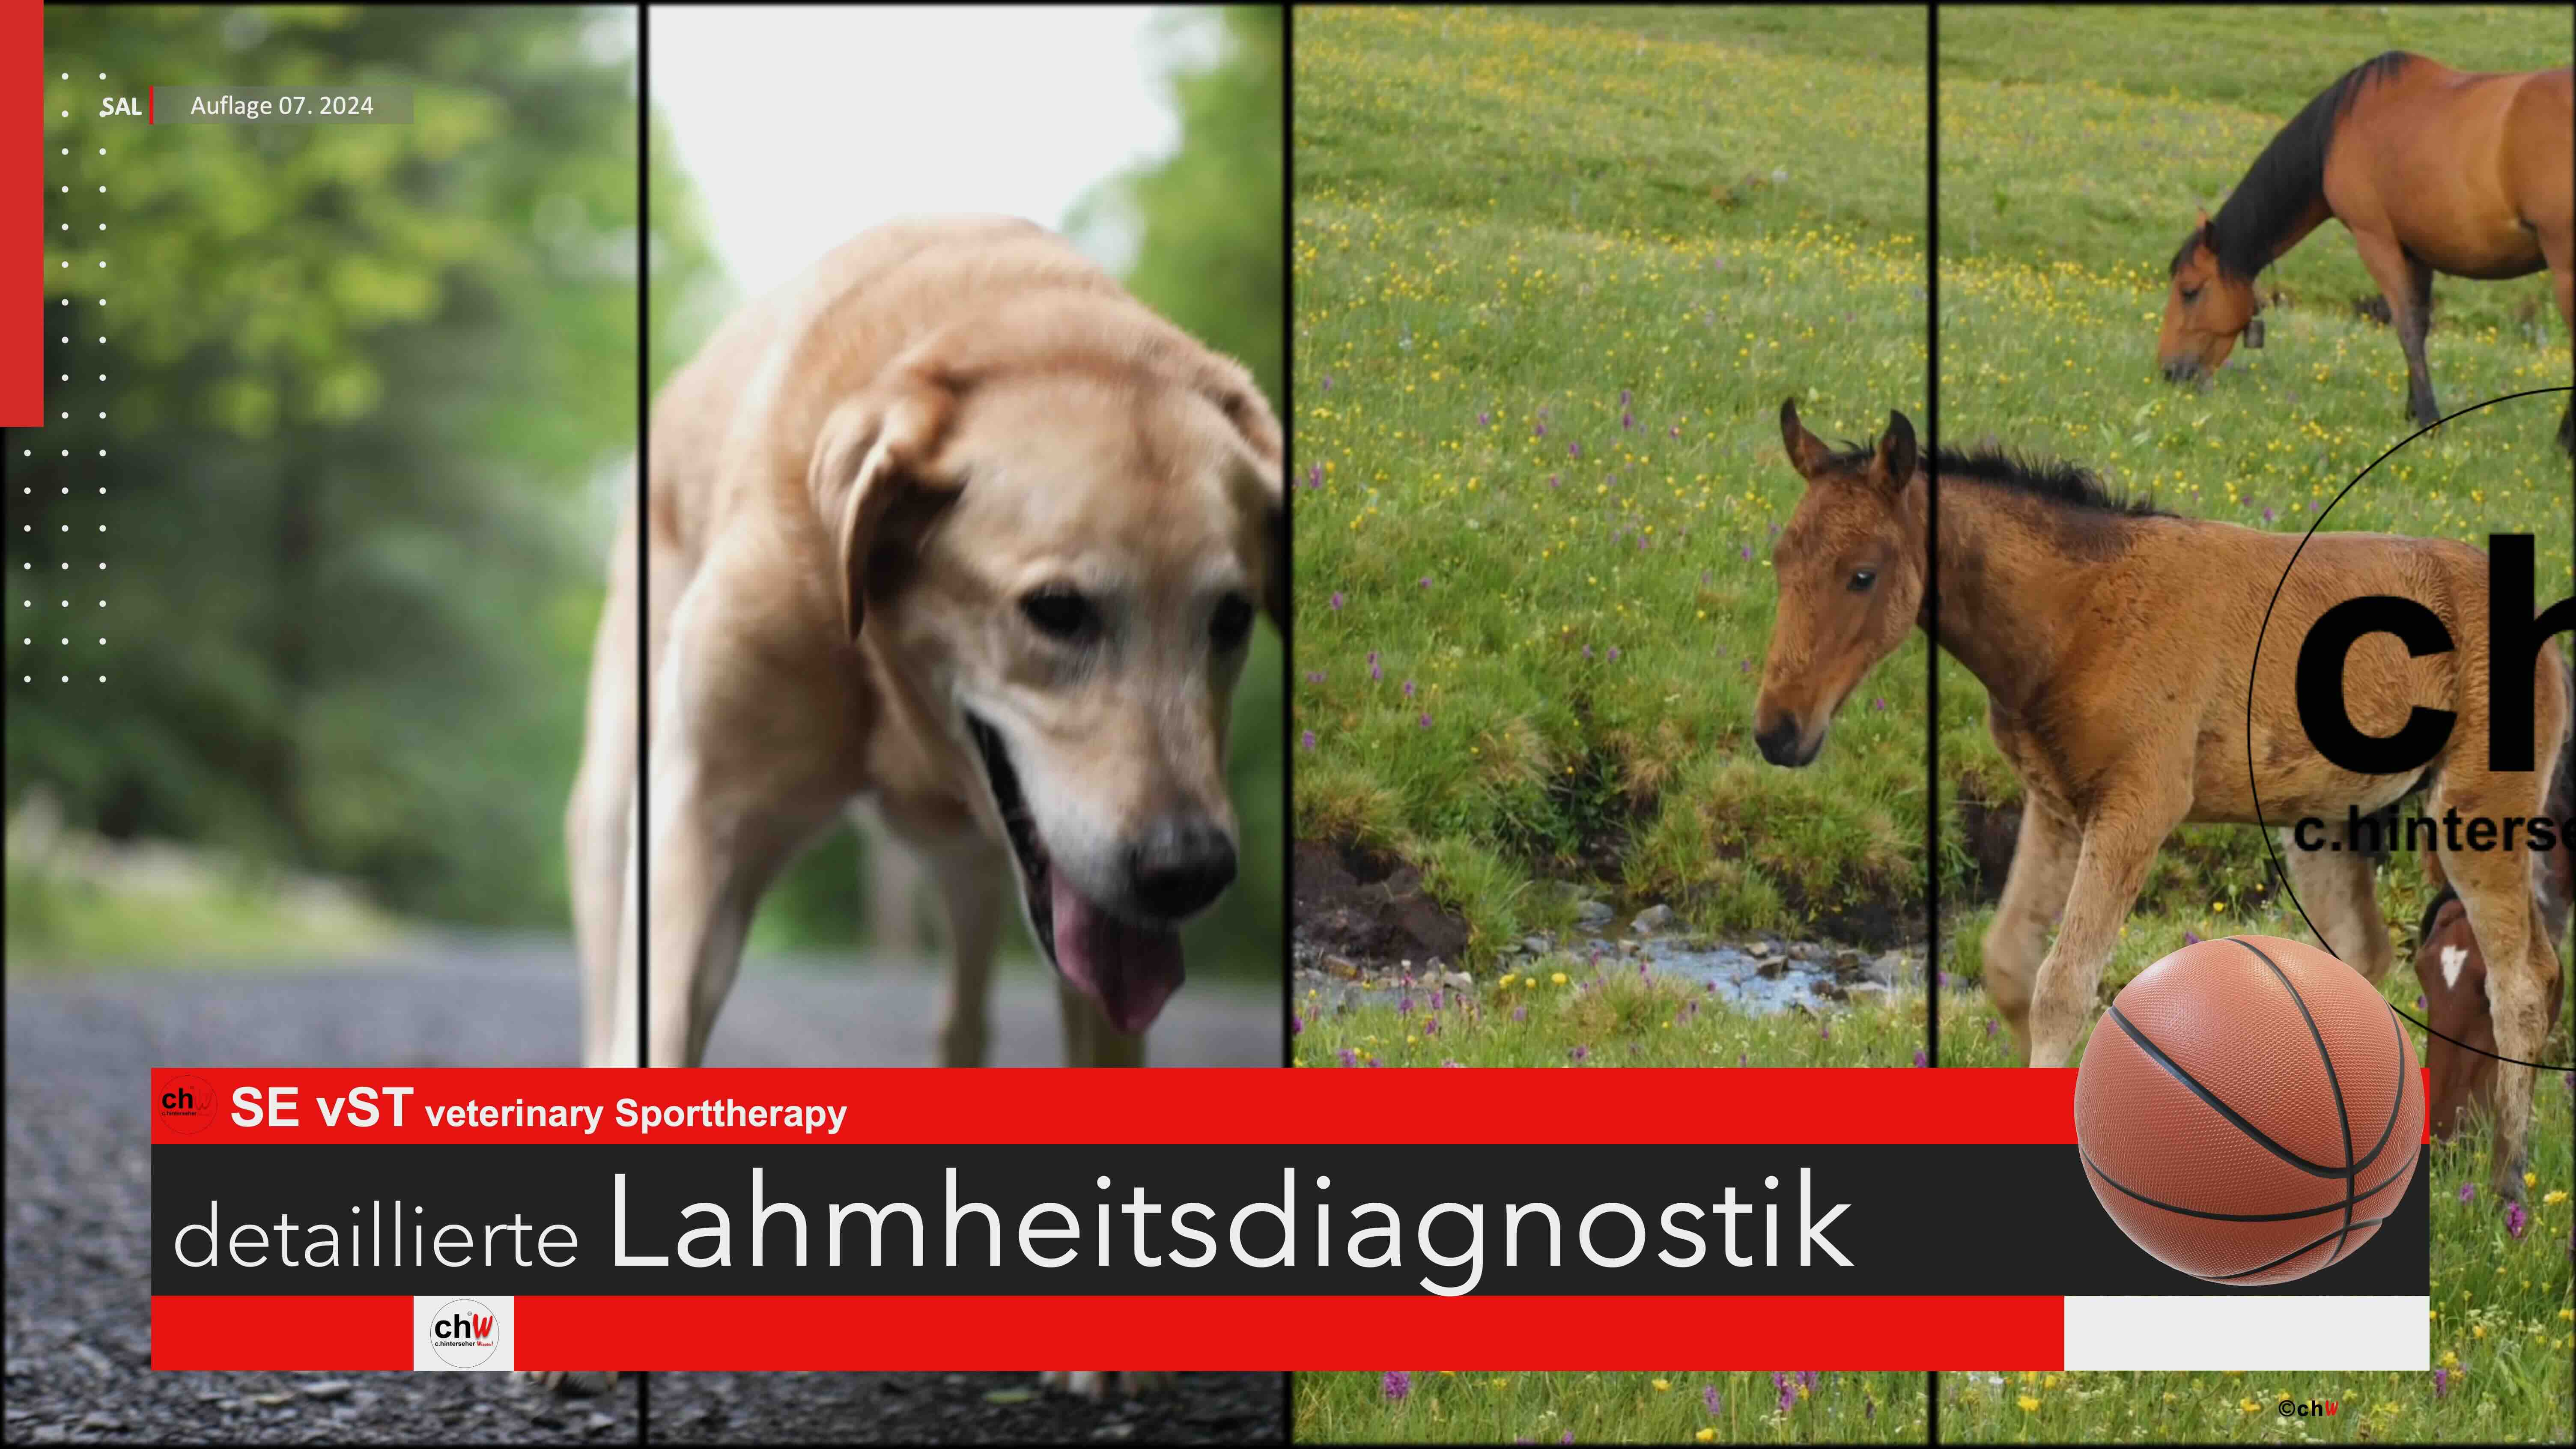 chW SE vST veterinary Sporttherapy detaillierte Lahmheitsdiagnostik